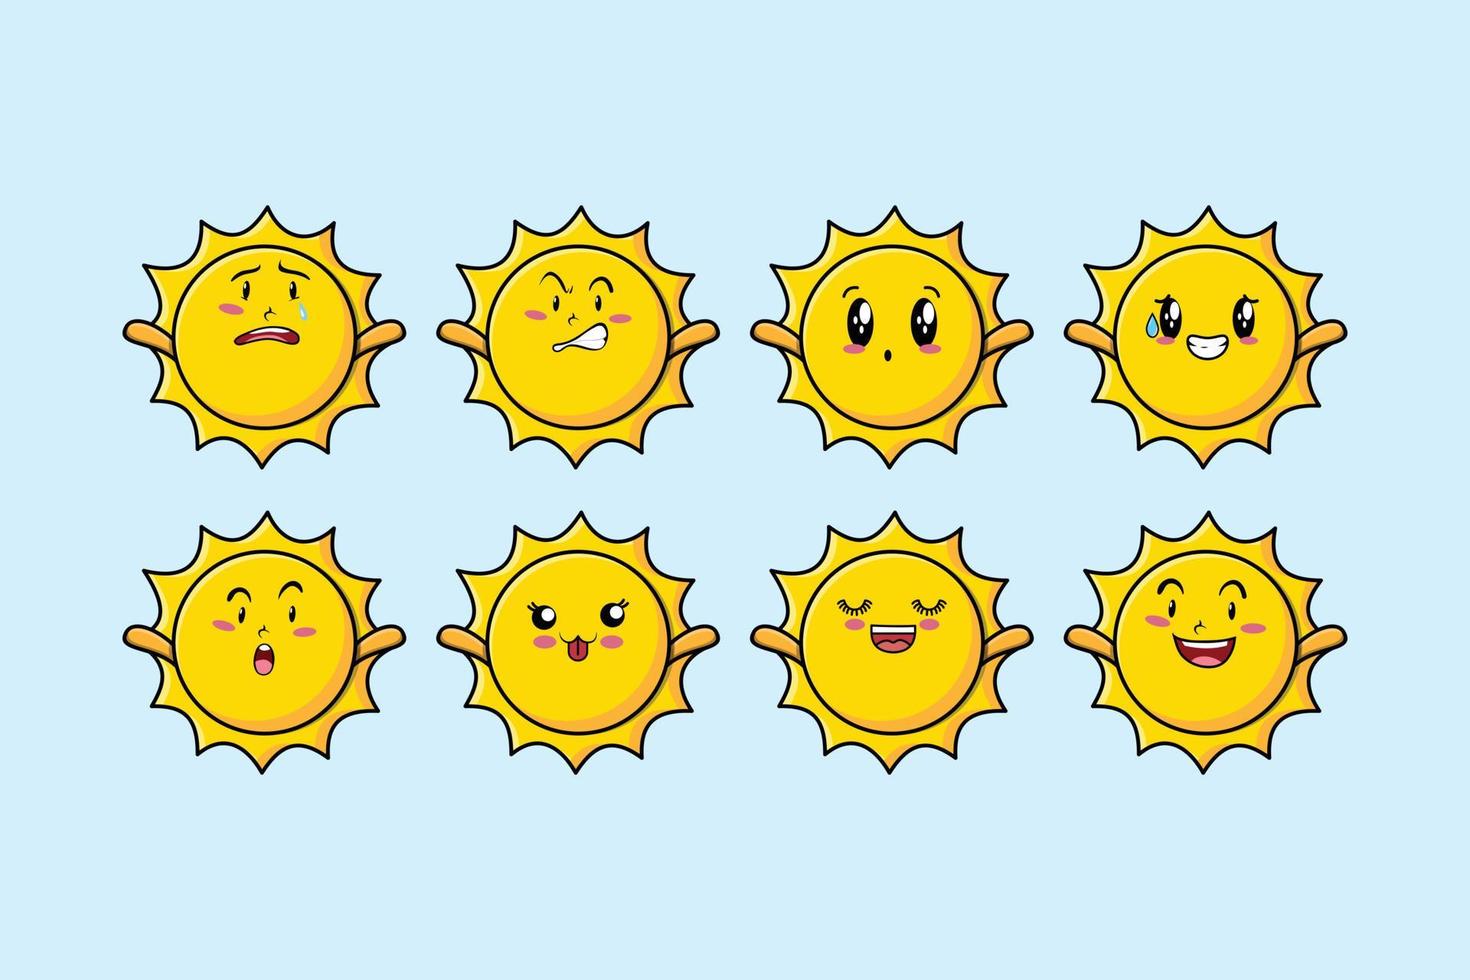 tecknad kawaii sol tecknad med olika uttryck vektor